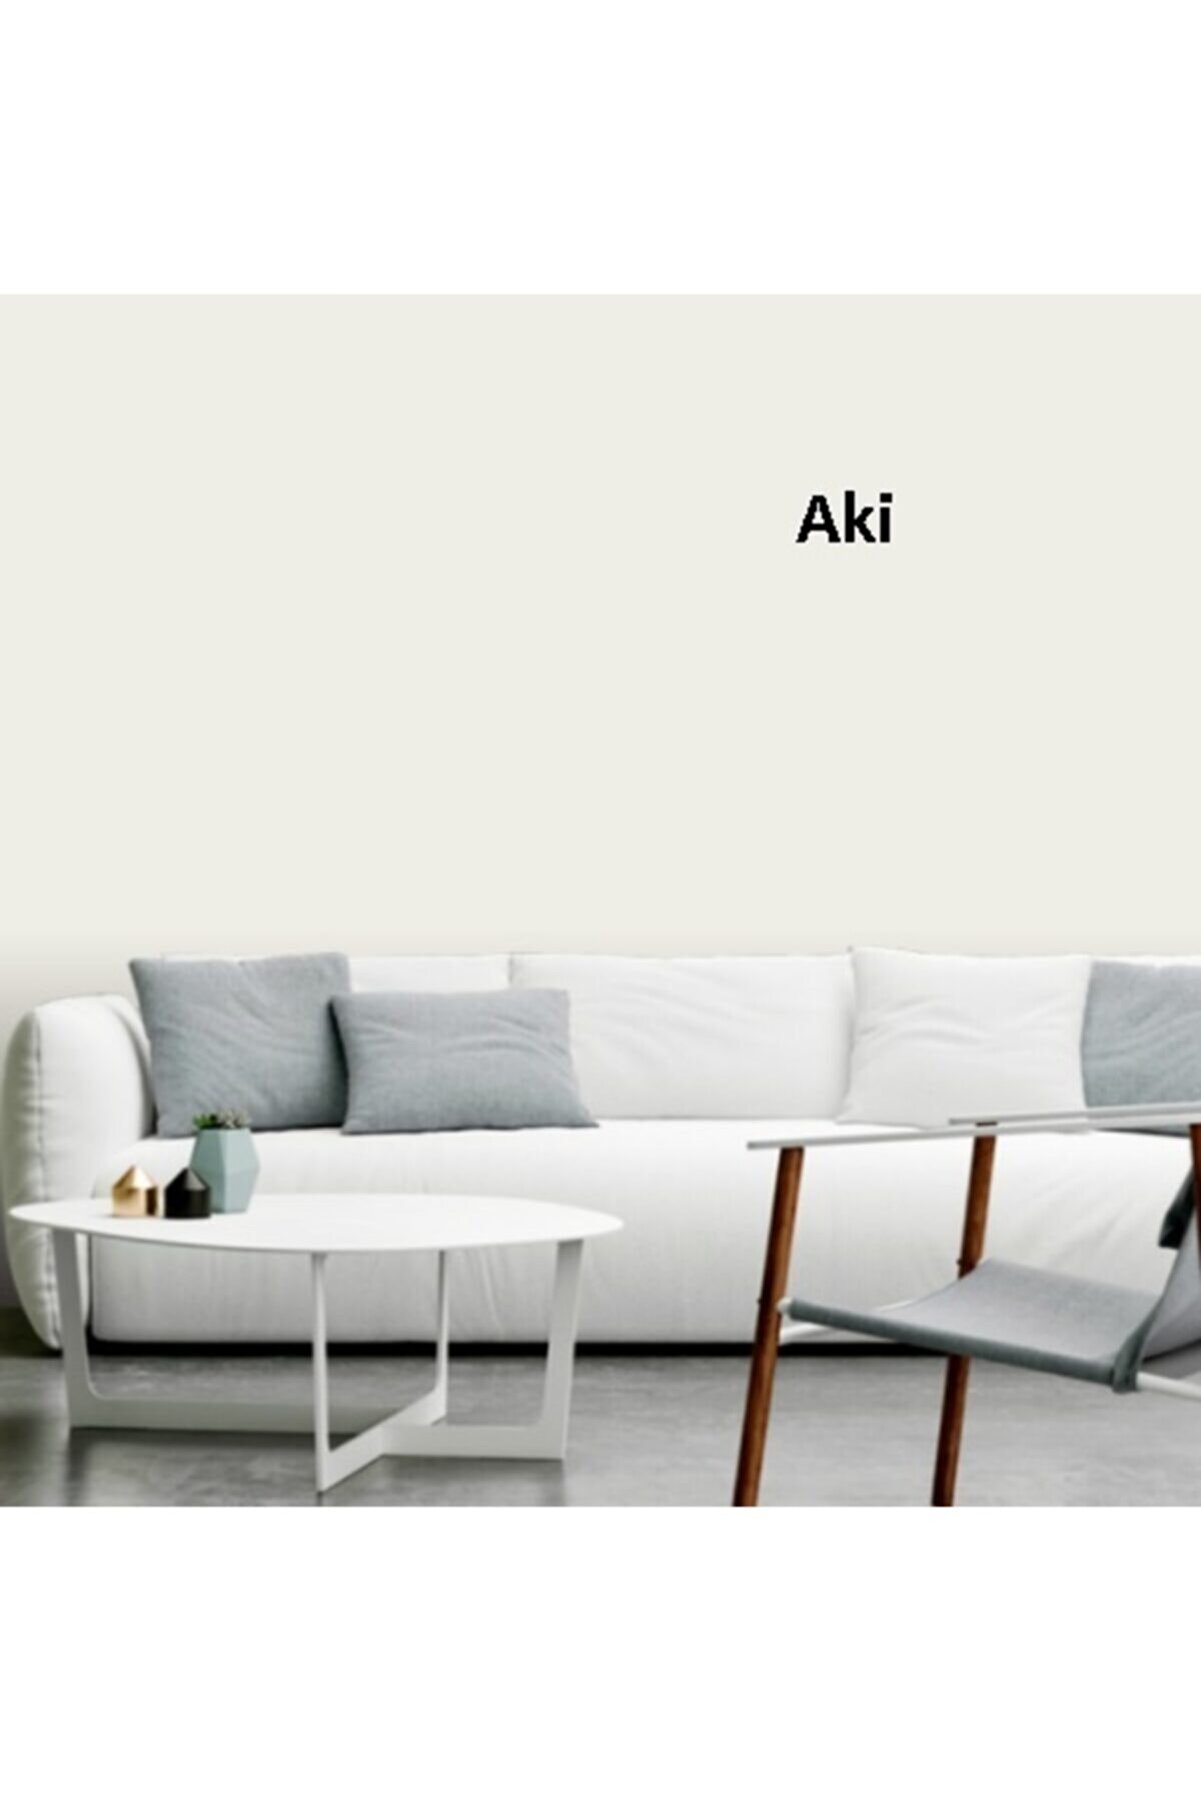 Filli Boya Momento Max 1.25lt Renk: Aki+kendinboya Set Soft Mat Silinebilir Iç Cephe Boyası